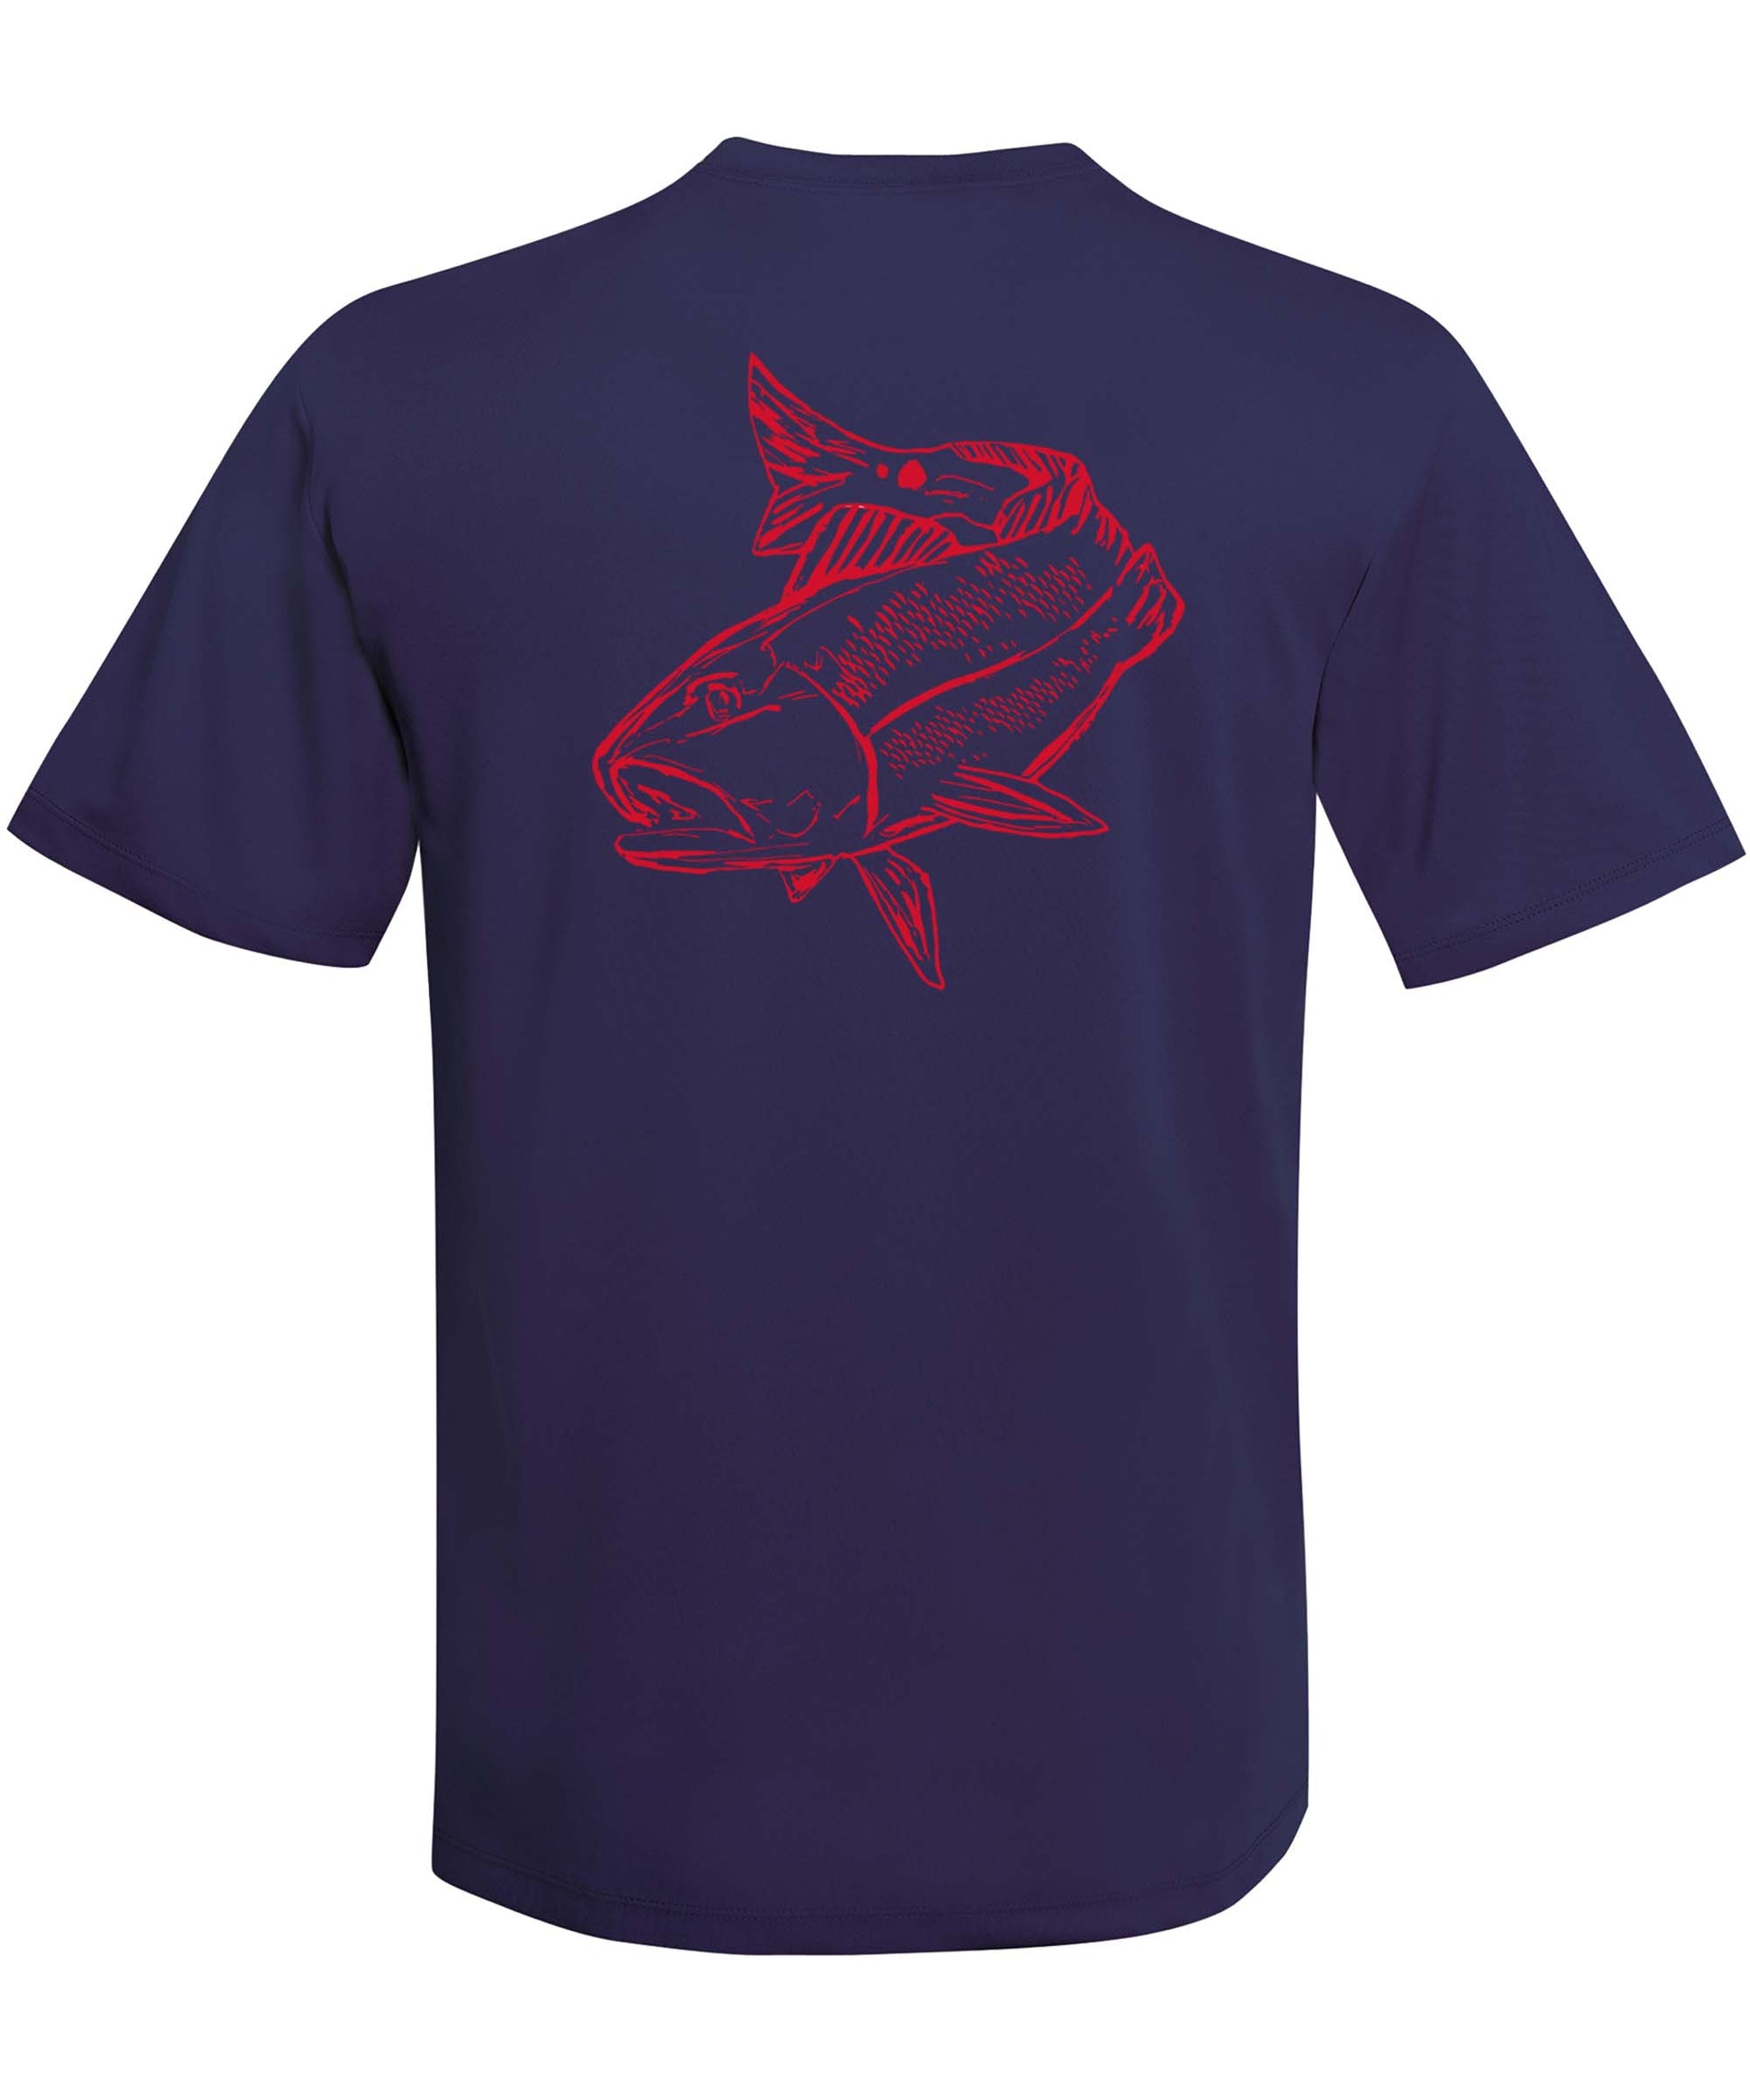 New Redfish Design! Performance Shirts, Hoodies, Digital Camo, 50+Upf M / Navy S/S - unisex